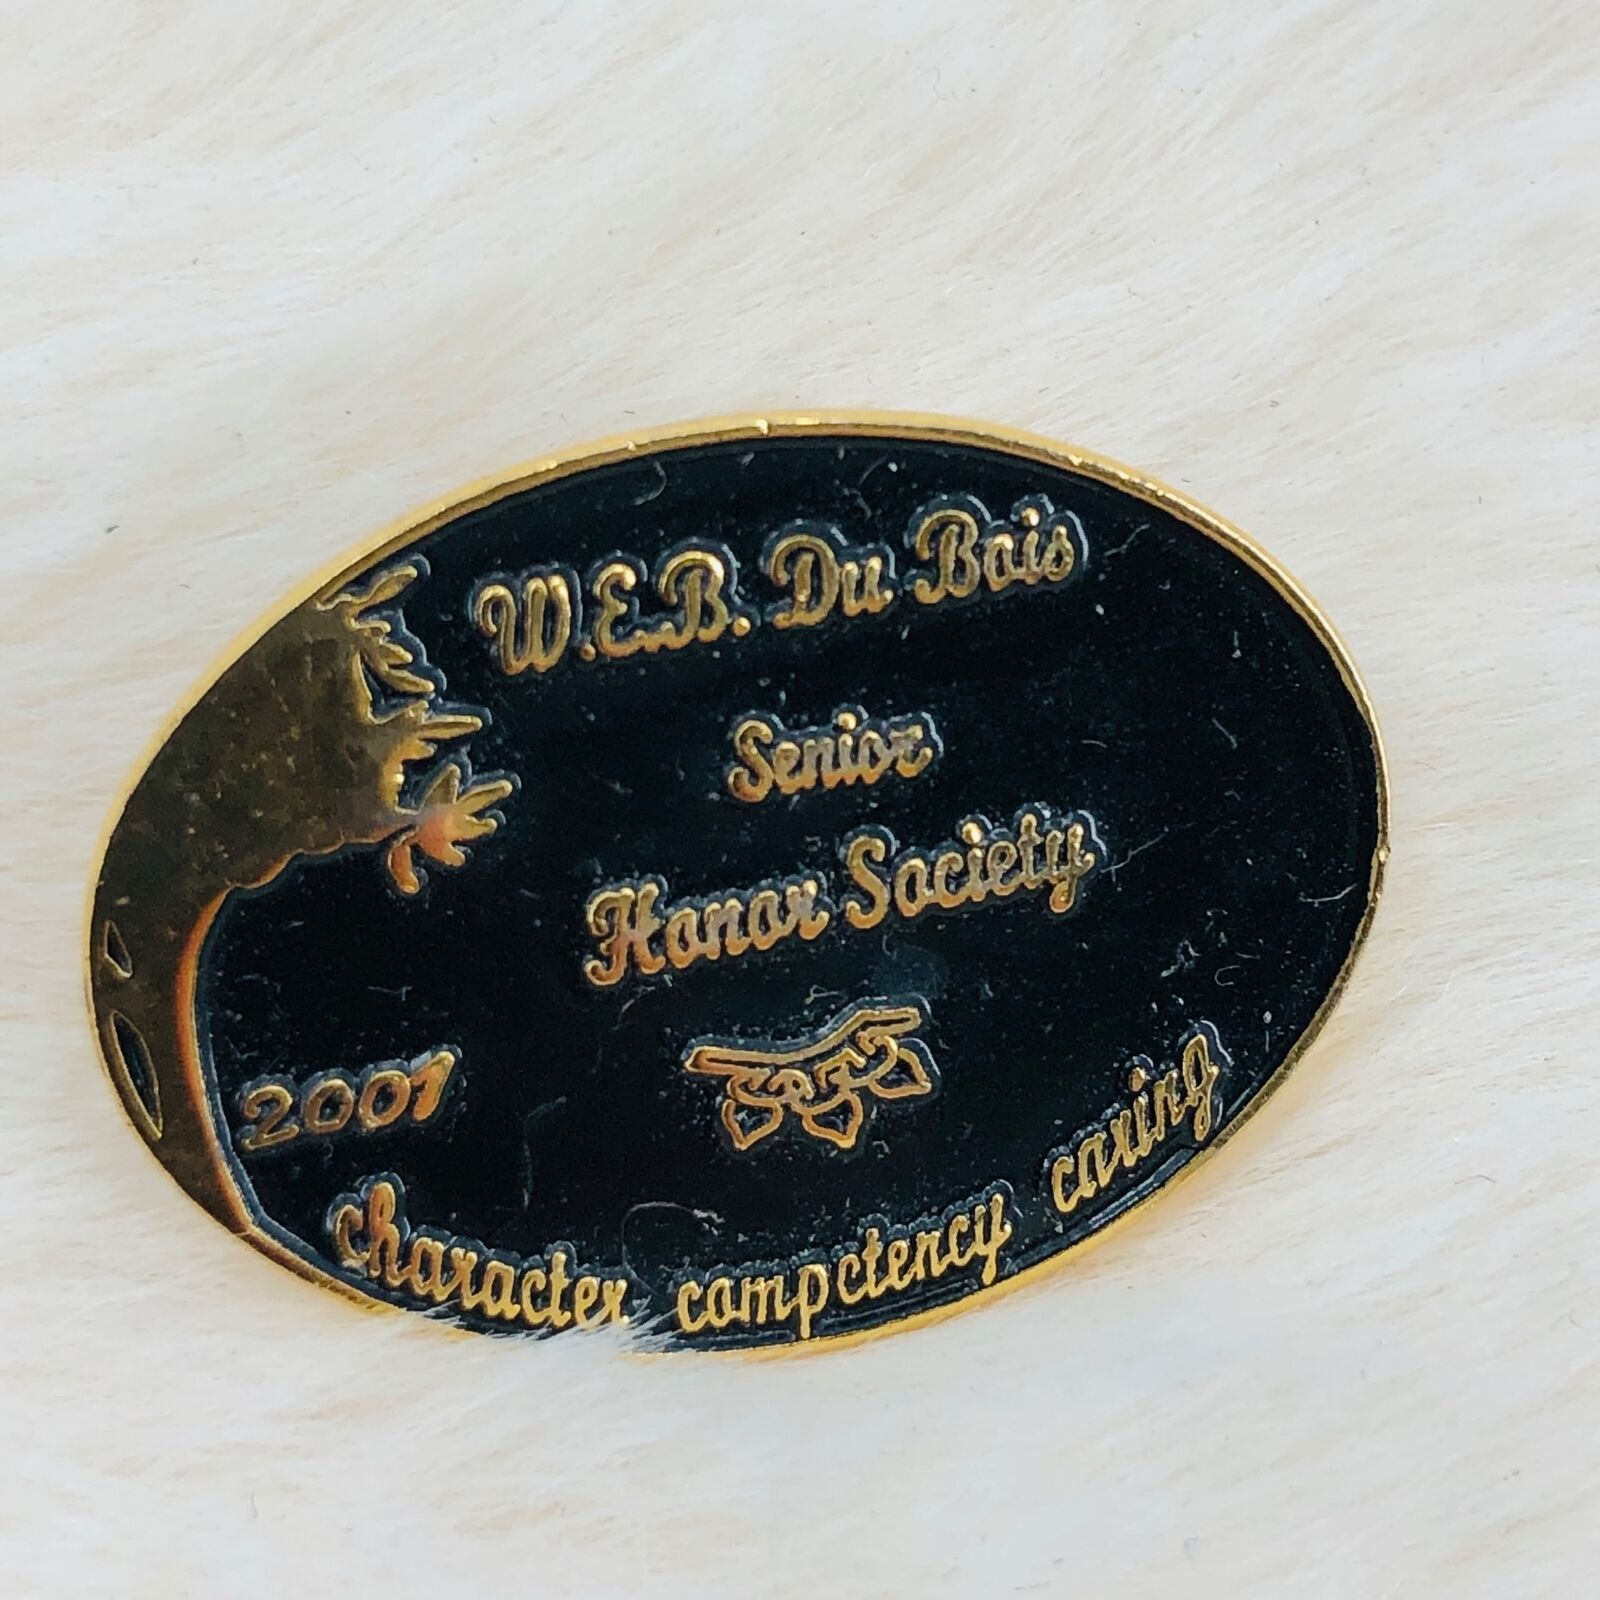 2001 W.E.B. Du Bois Senior Honor Society Member Lapel Pin